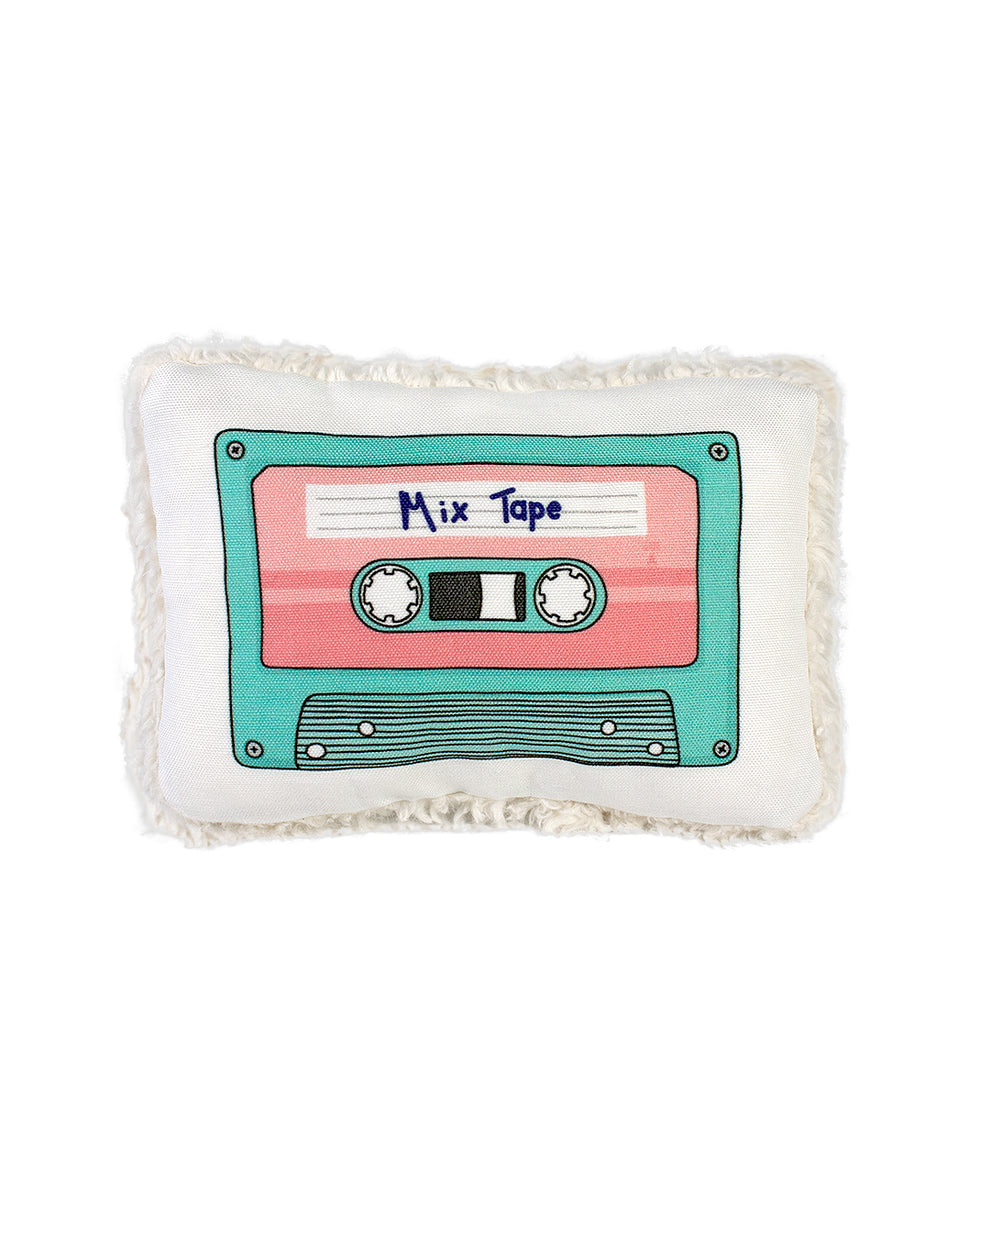 Mix Tape - Eco-Friendly Dog Toy